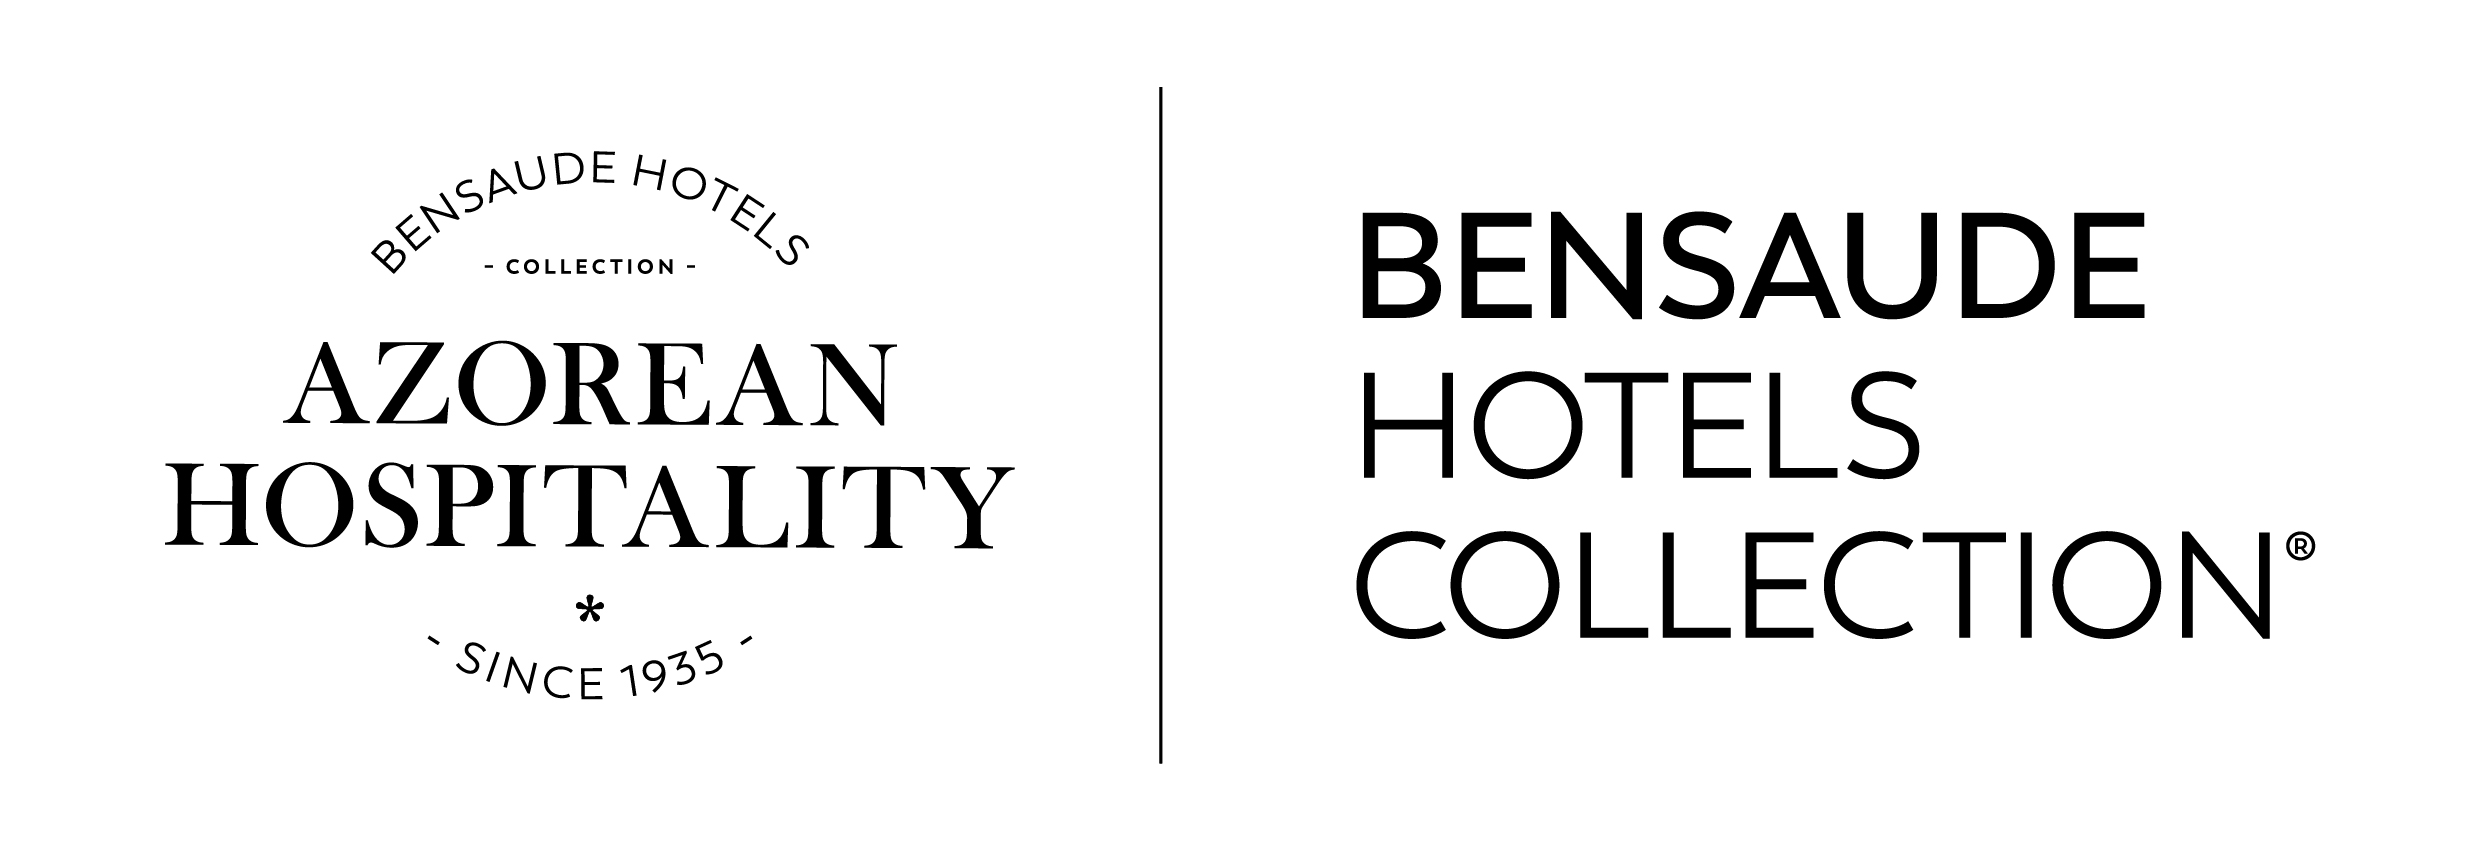 Bensaude Hotels Collection